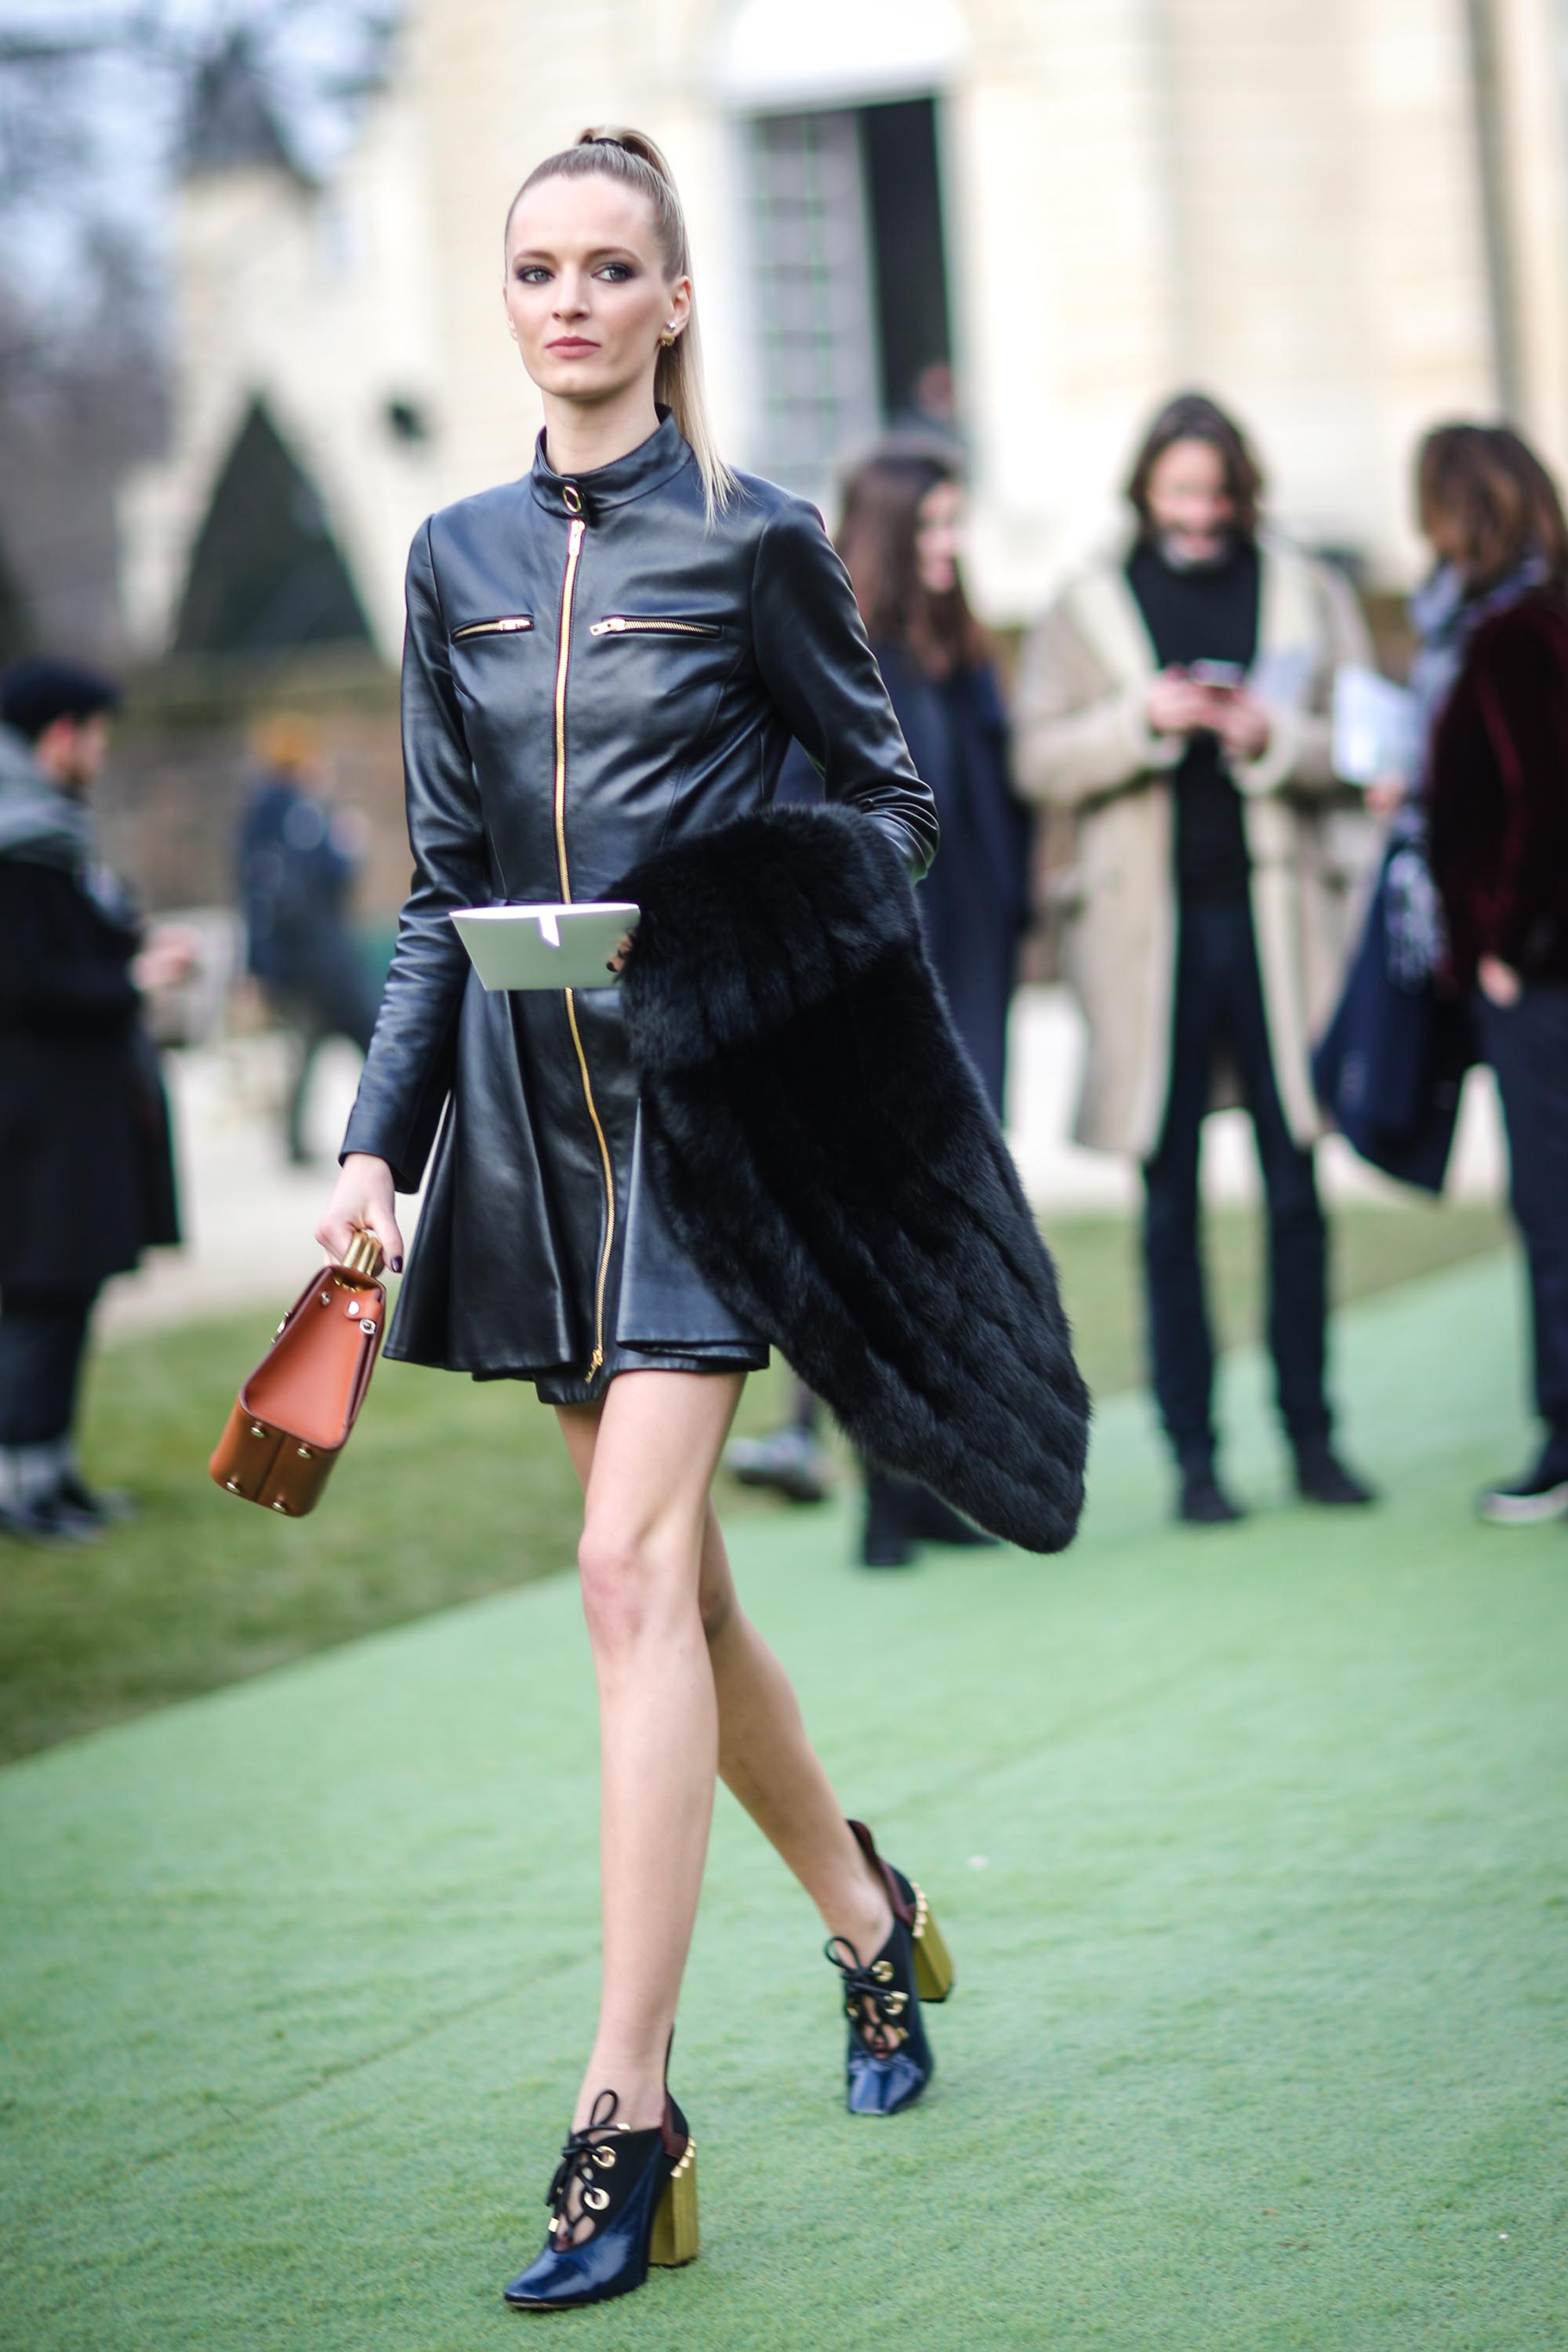 Street Style in Paris during the Paris Fashion Week